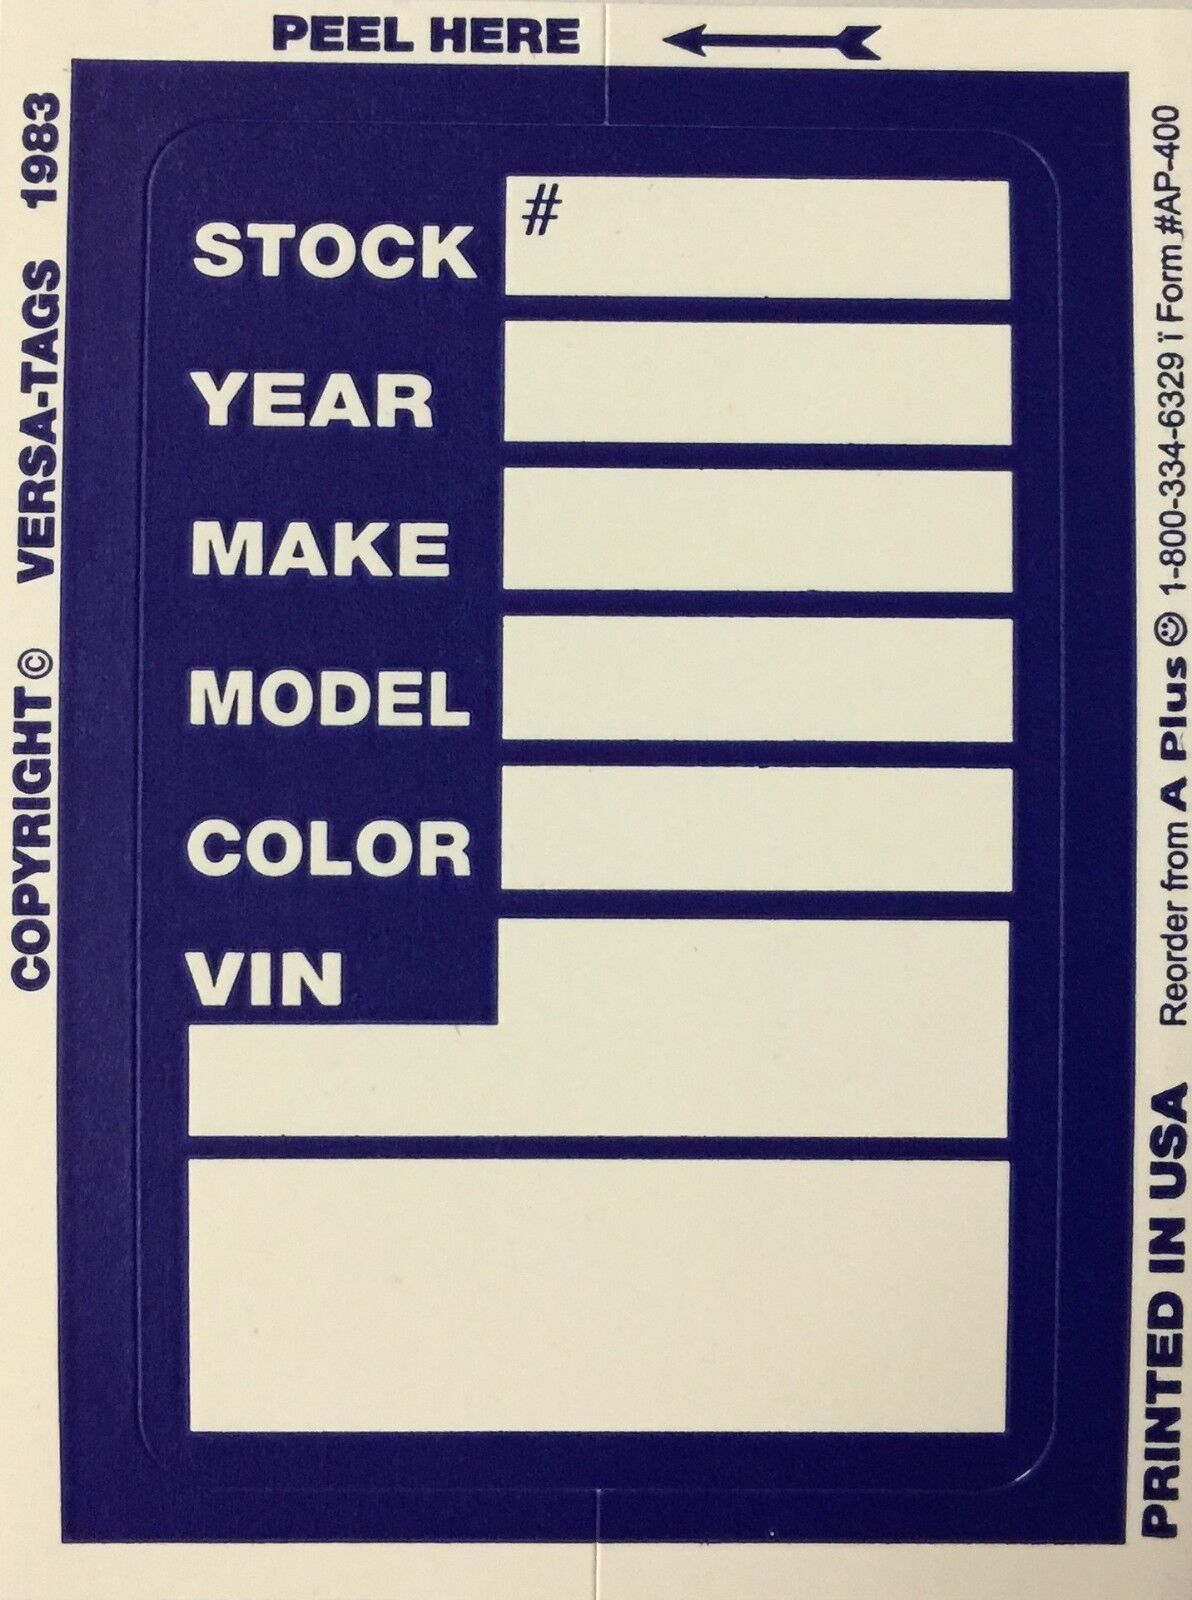 Versa Tag Kleer Bak Stock Stickers, 500 Car Dealer Stock Stickers 